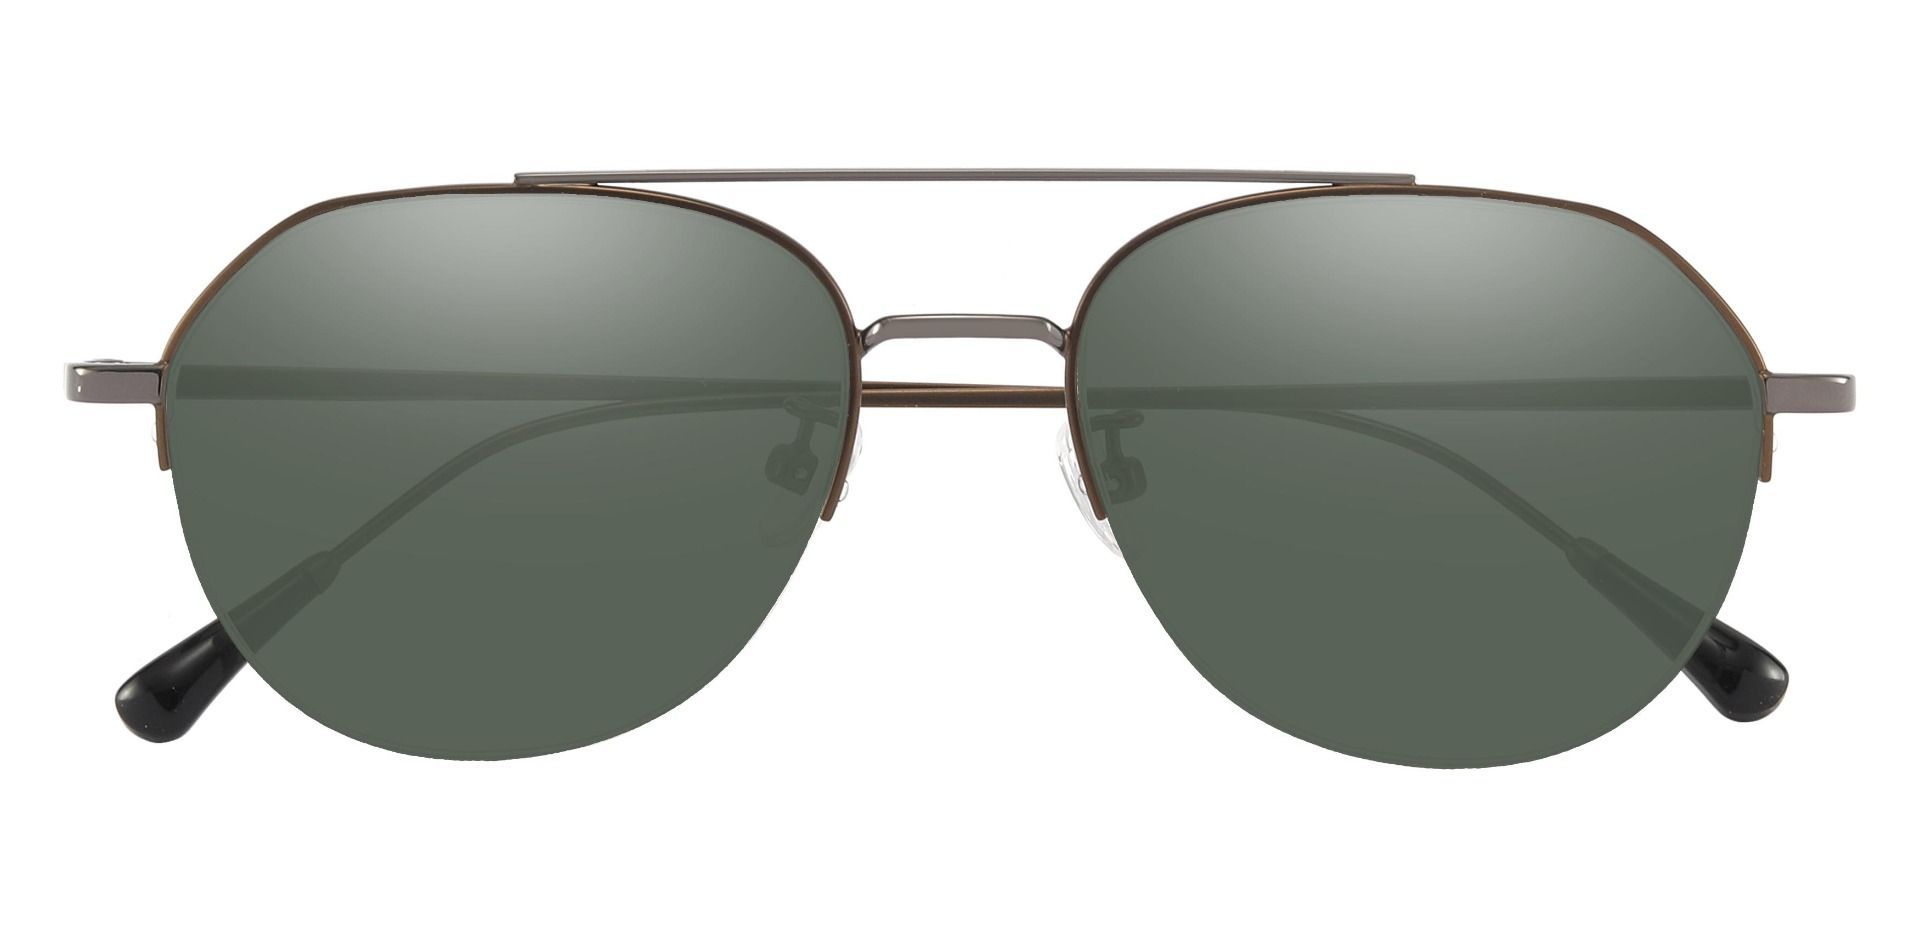 Waldorf Aviator Progressive Sunglasses - Brown Frame With Green Lenses